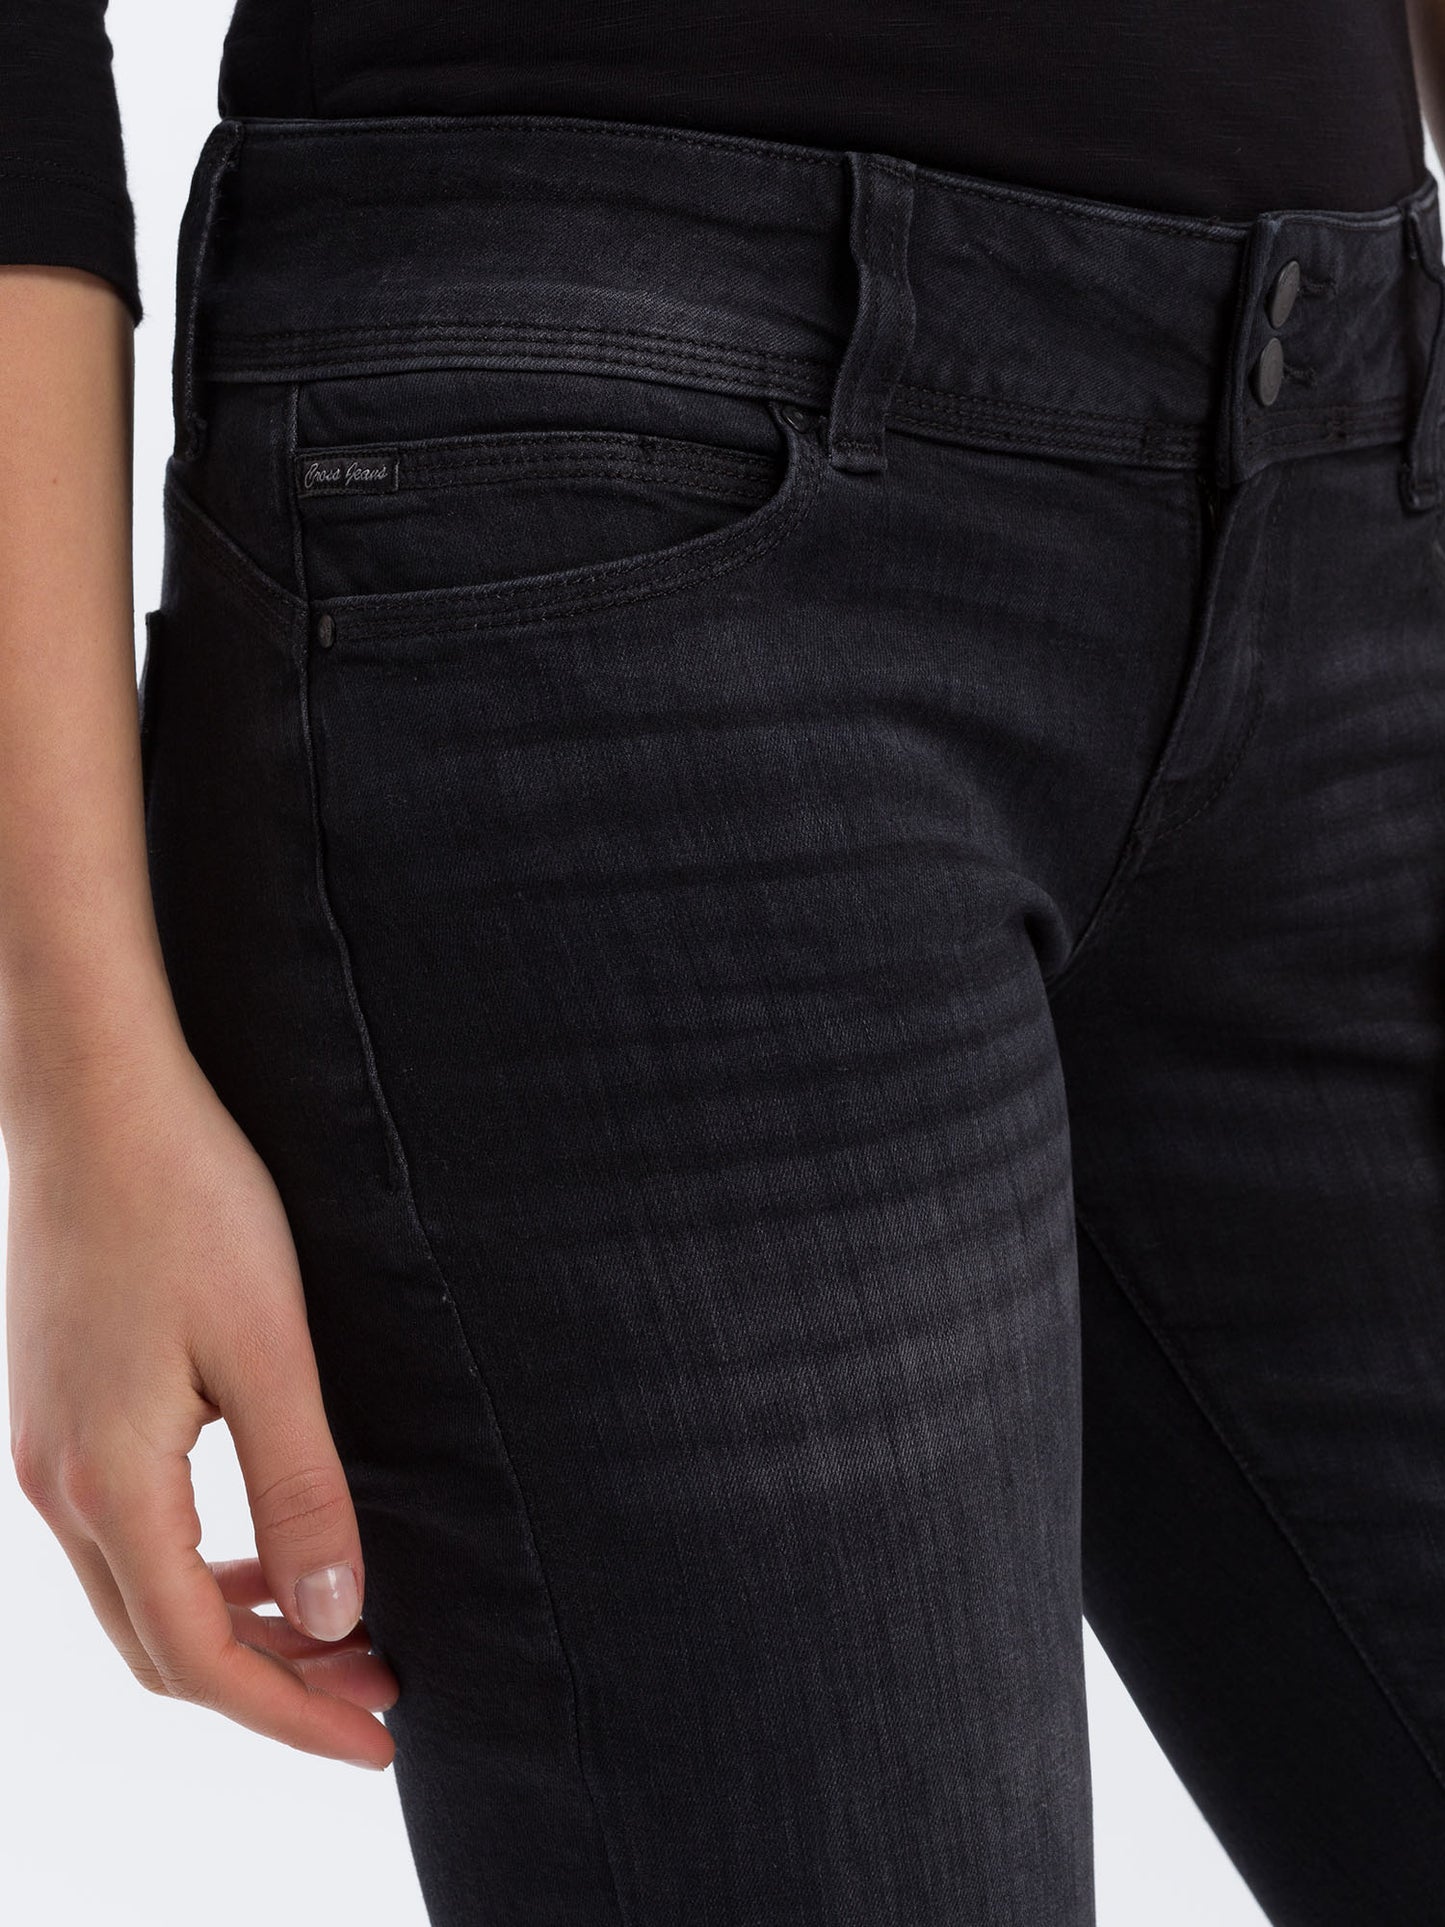 Loie women's jeans, regular fit, mid waist, straight leg